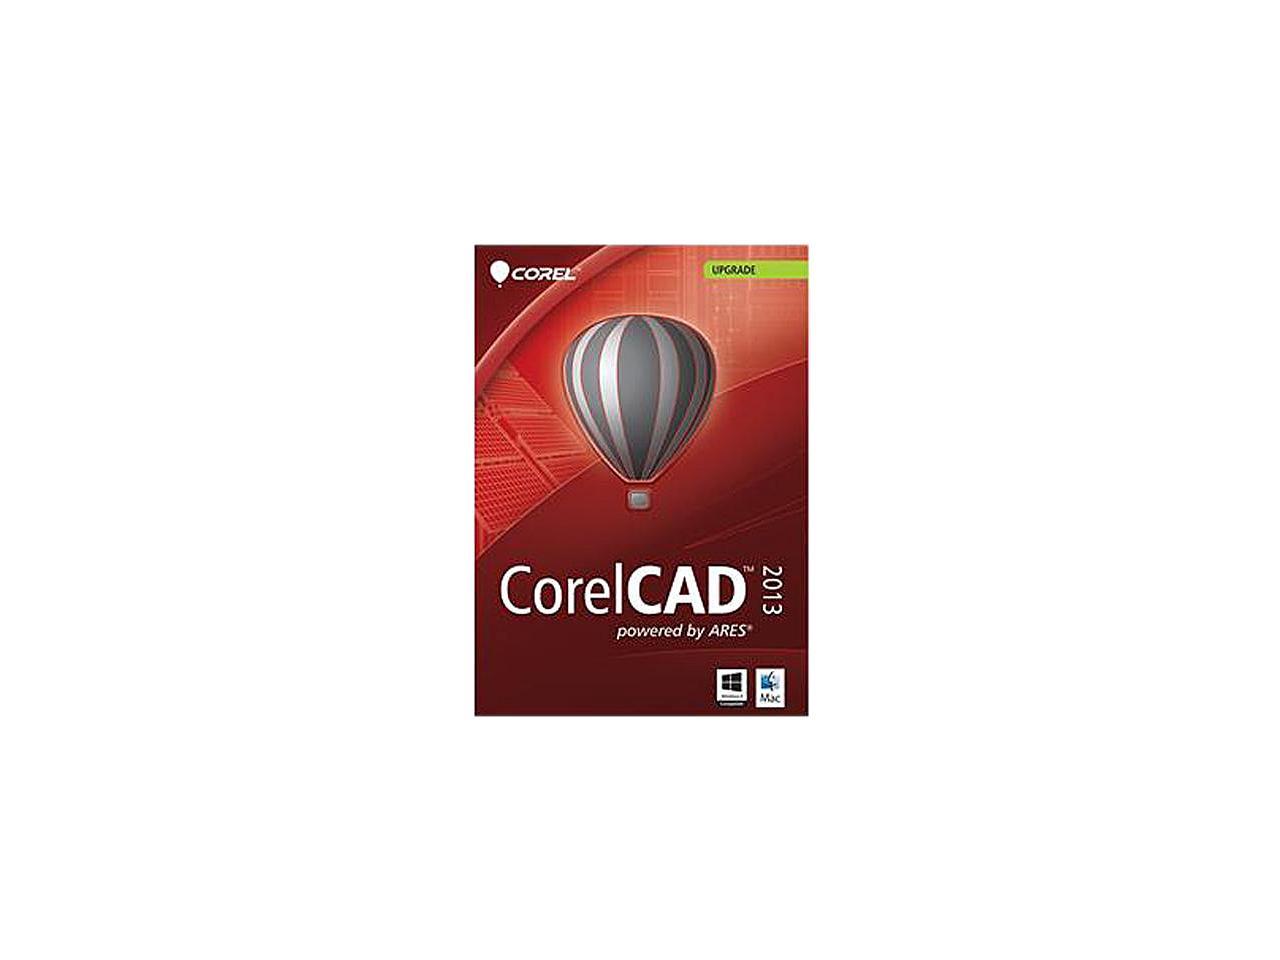 corelcad 2013 free download